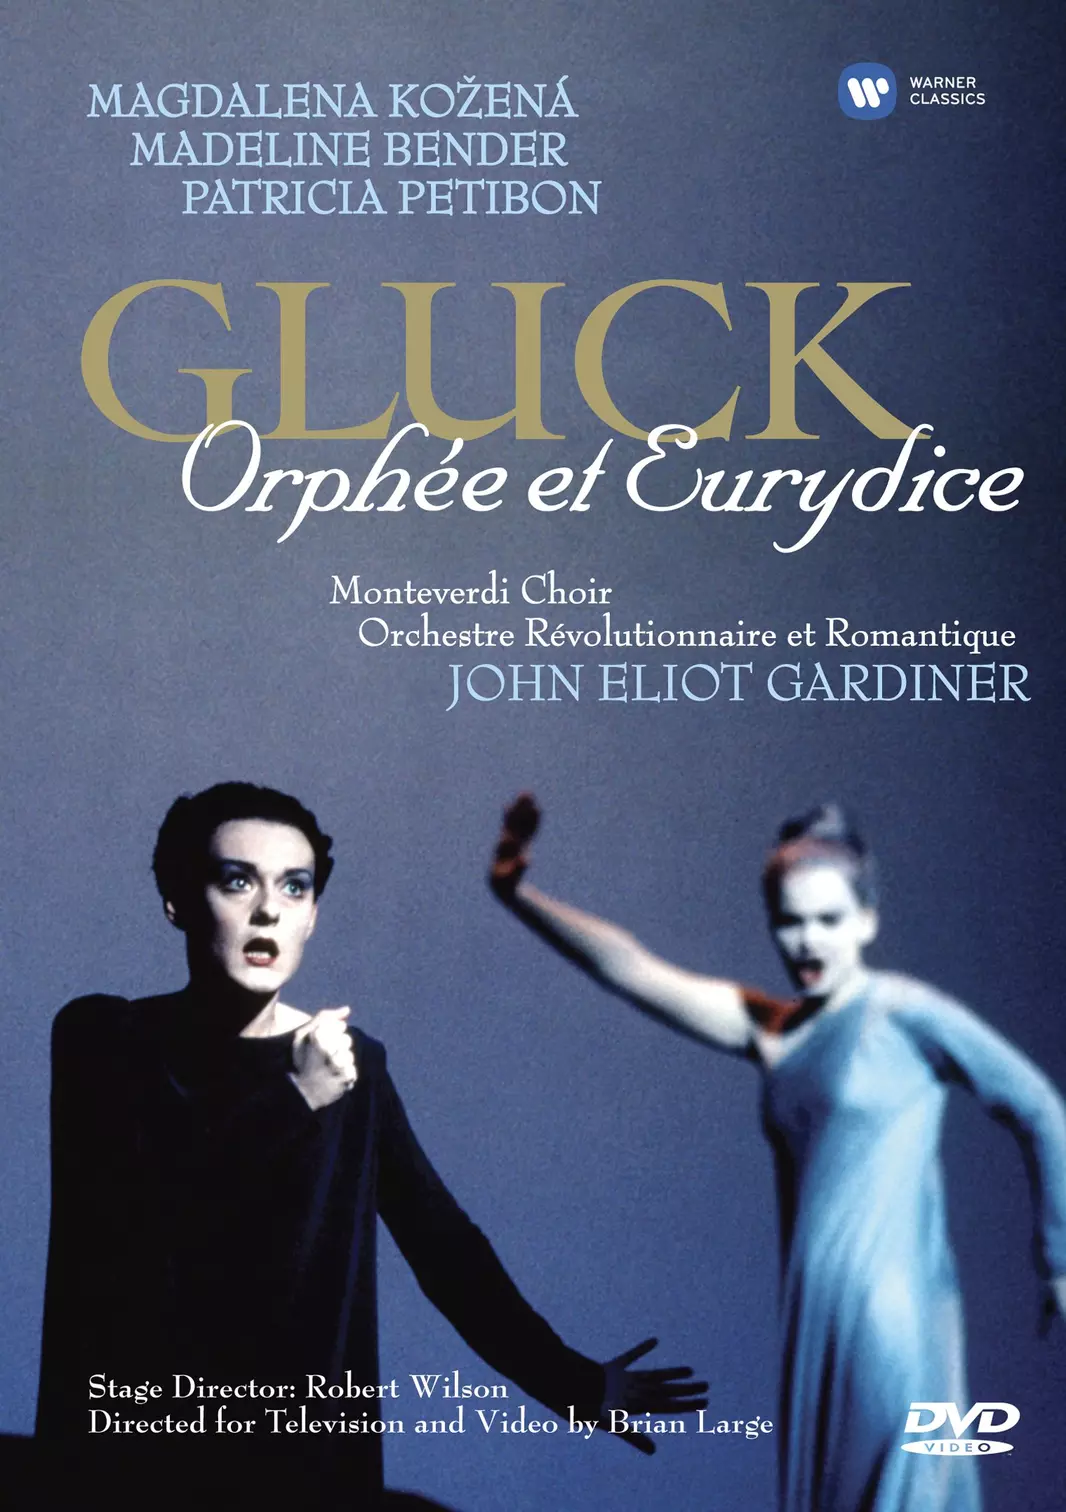 Gluck: Orphee et Eurydice